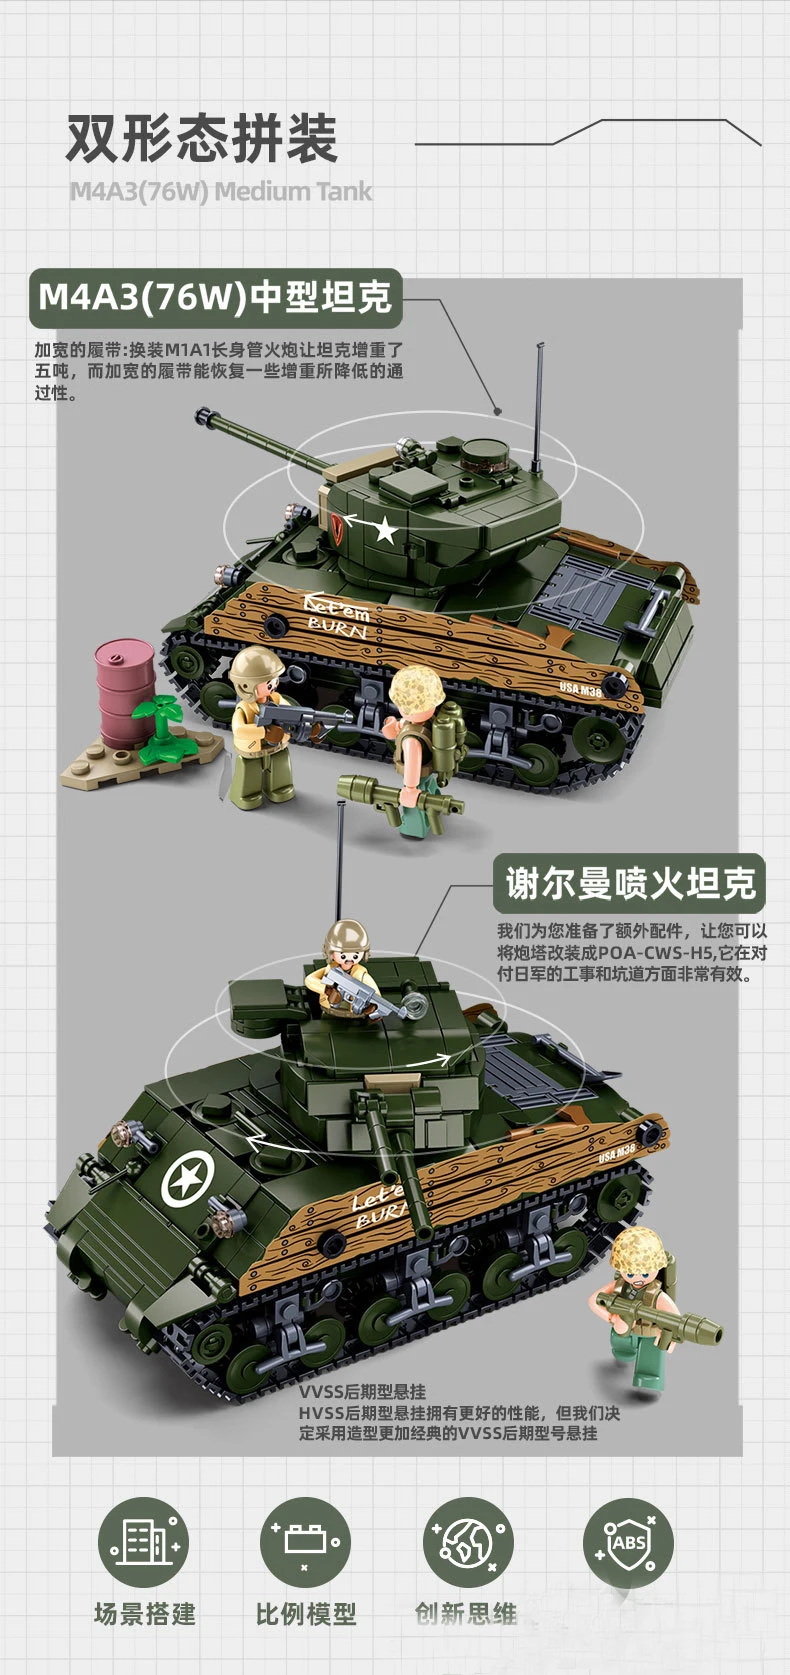 Sluban Building Blocks Toy WWII - Medium Tank M4A3 (Sherman IV) 76W  Educational Learning Construction Toys Set for Kids Boys Grils (715 PCS)